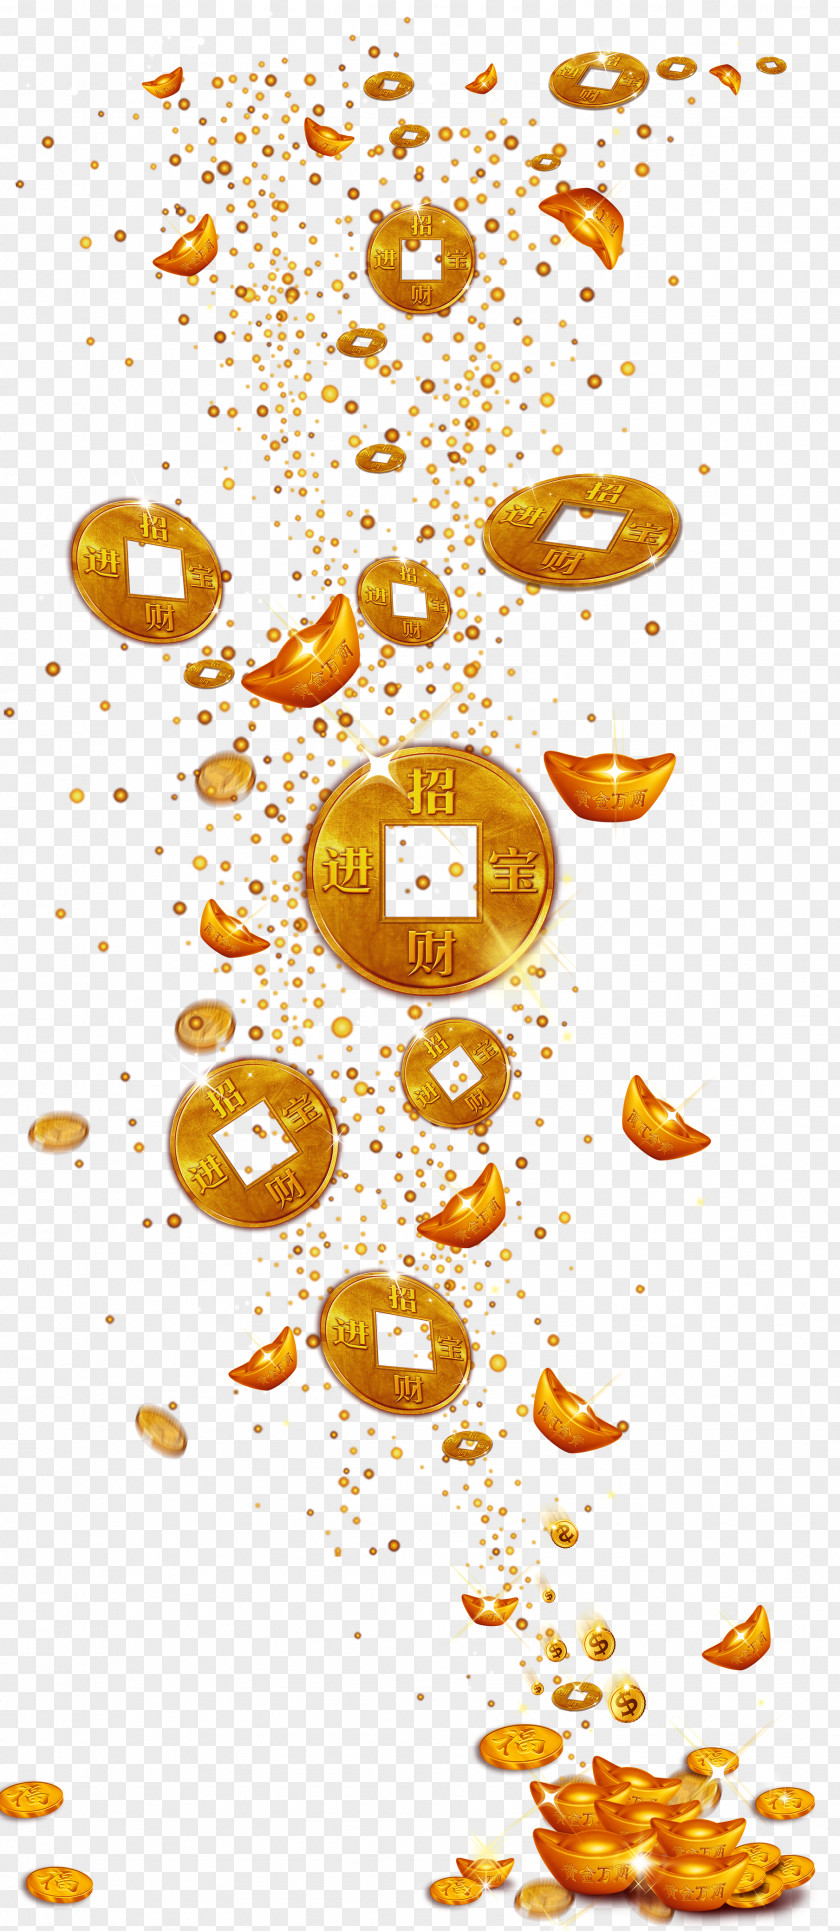 Golden Atmosphere Falling Money Gold Ingot Material Coin PNG